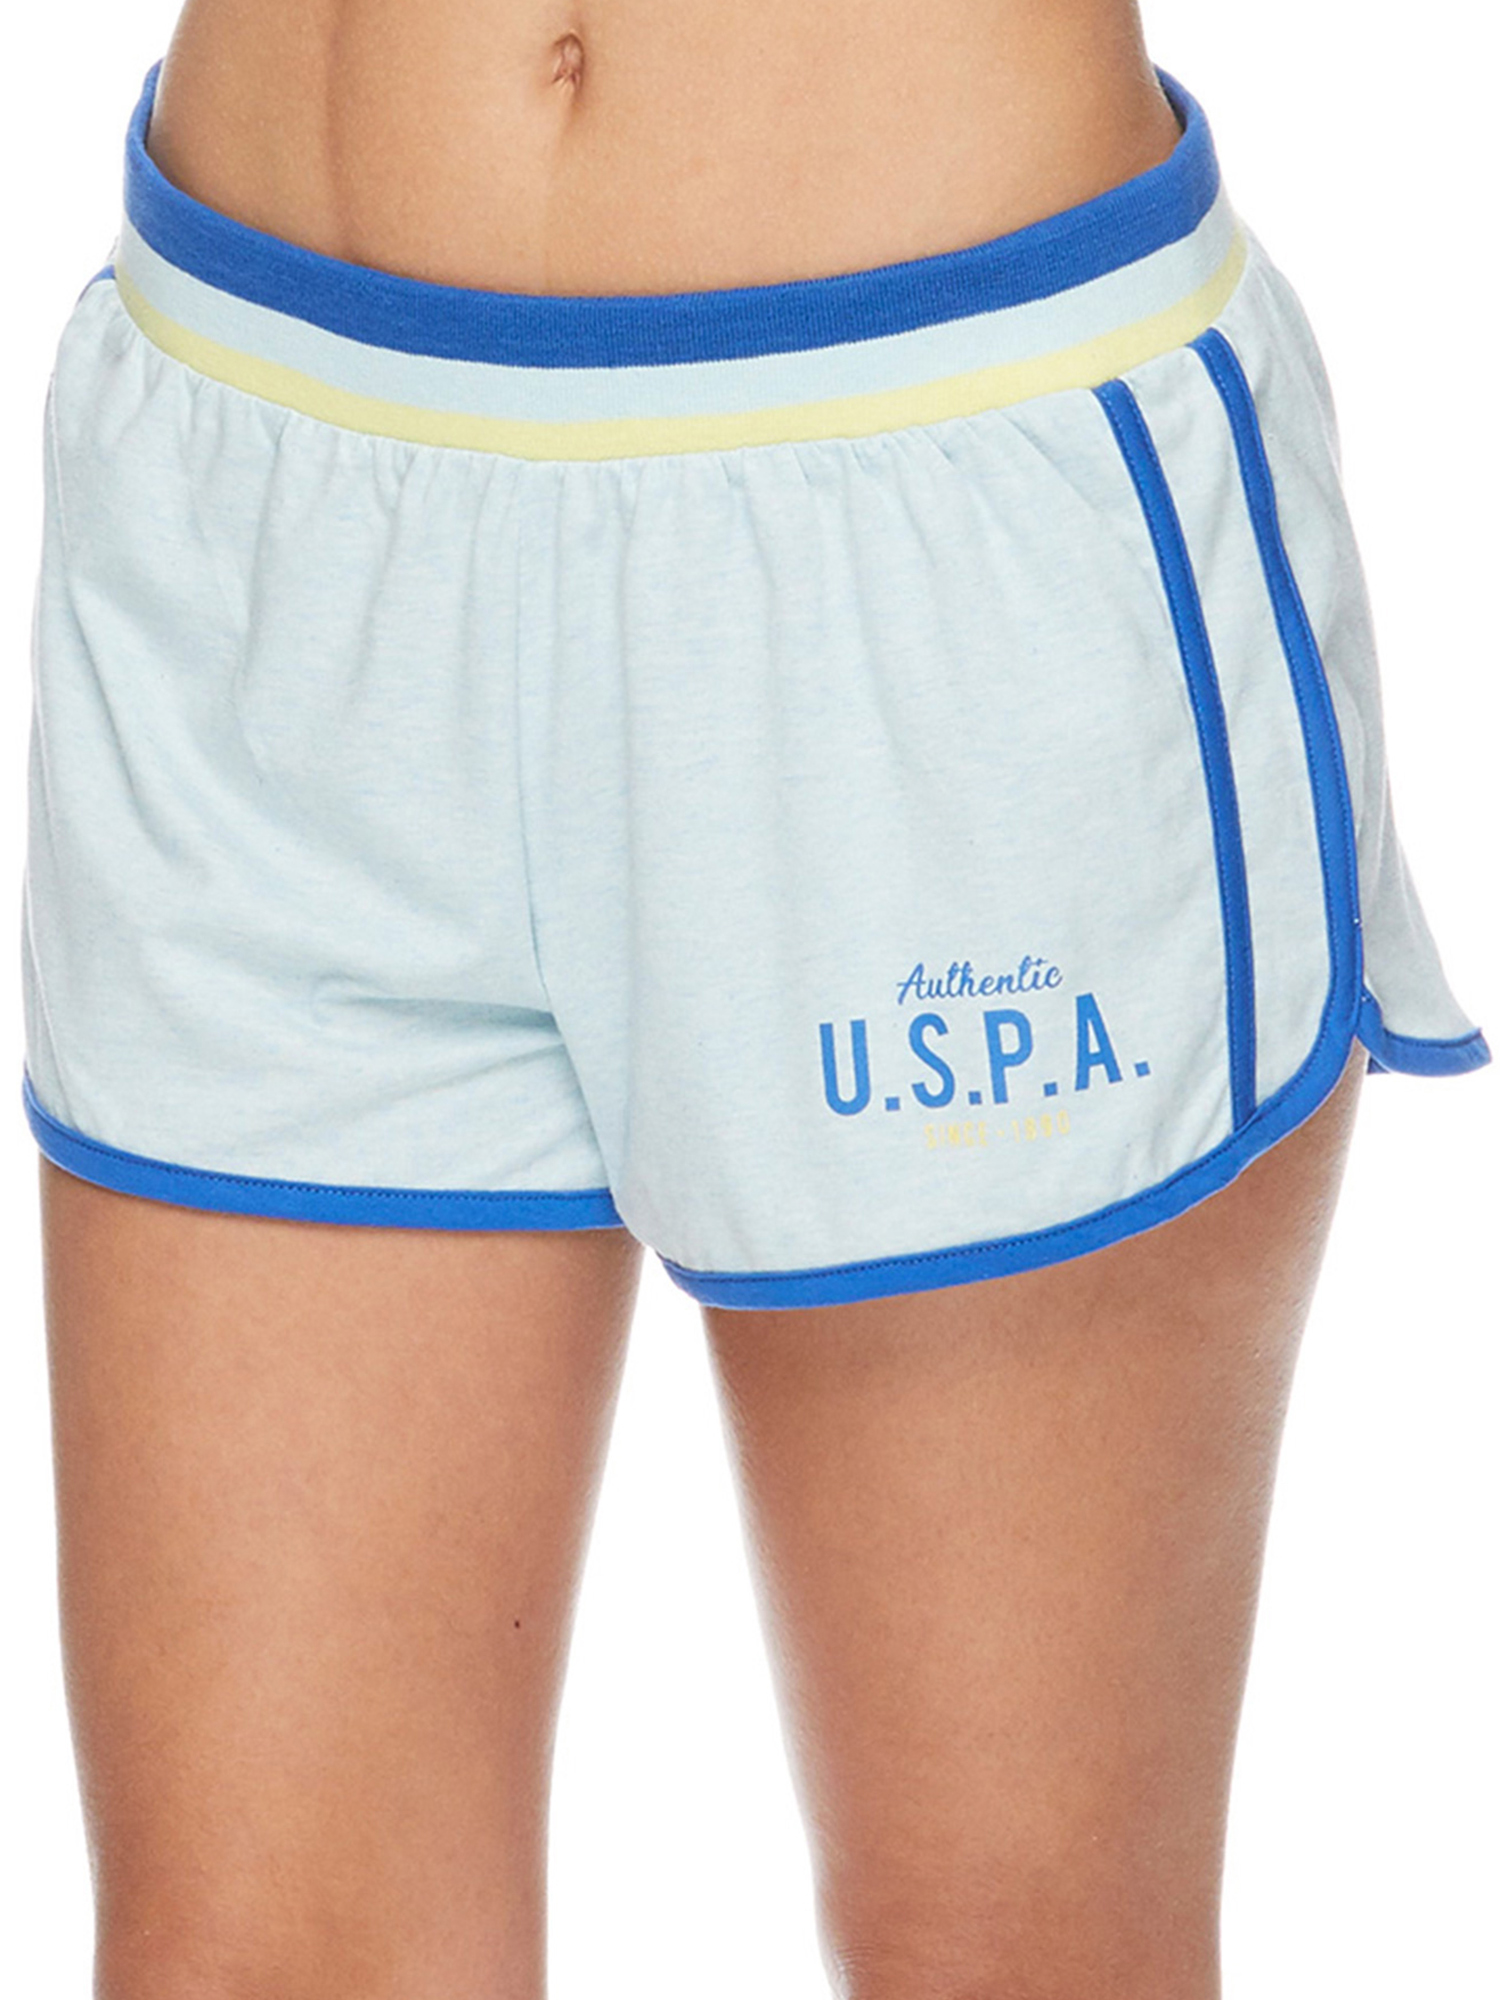 U.S. Polo Assn. Women's 2pc Tank Top and Shorts Lounge Pajama Sleep Set with U.S.P.A. Logo - image 5 of 5